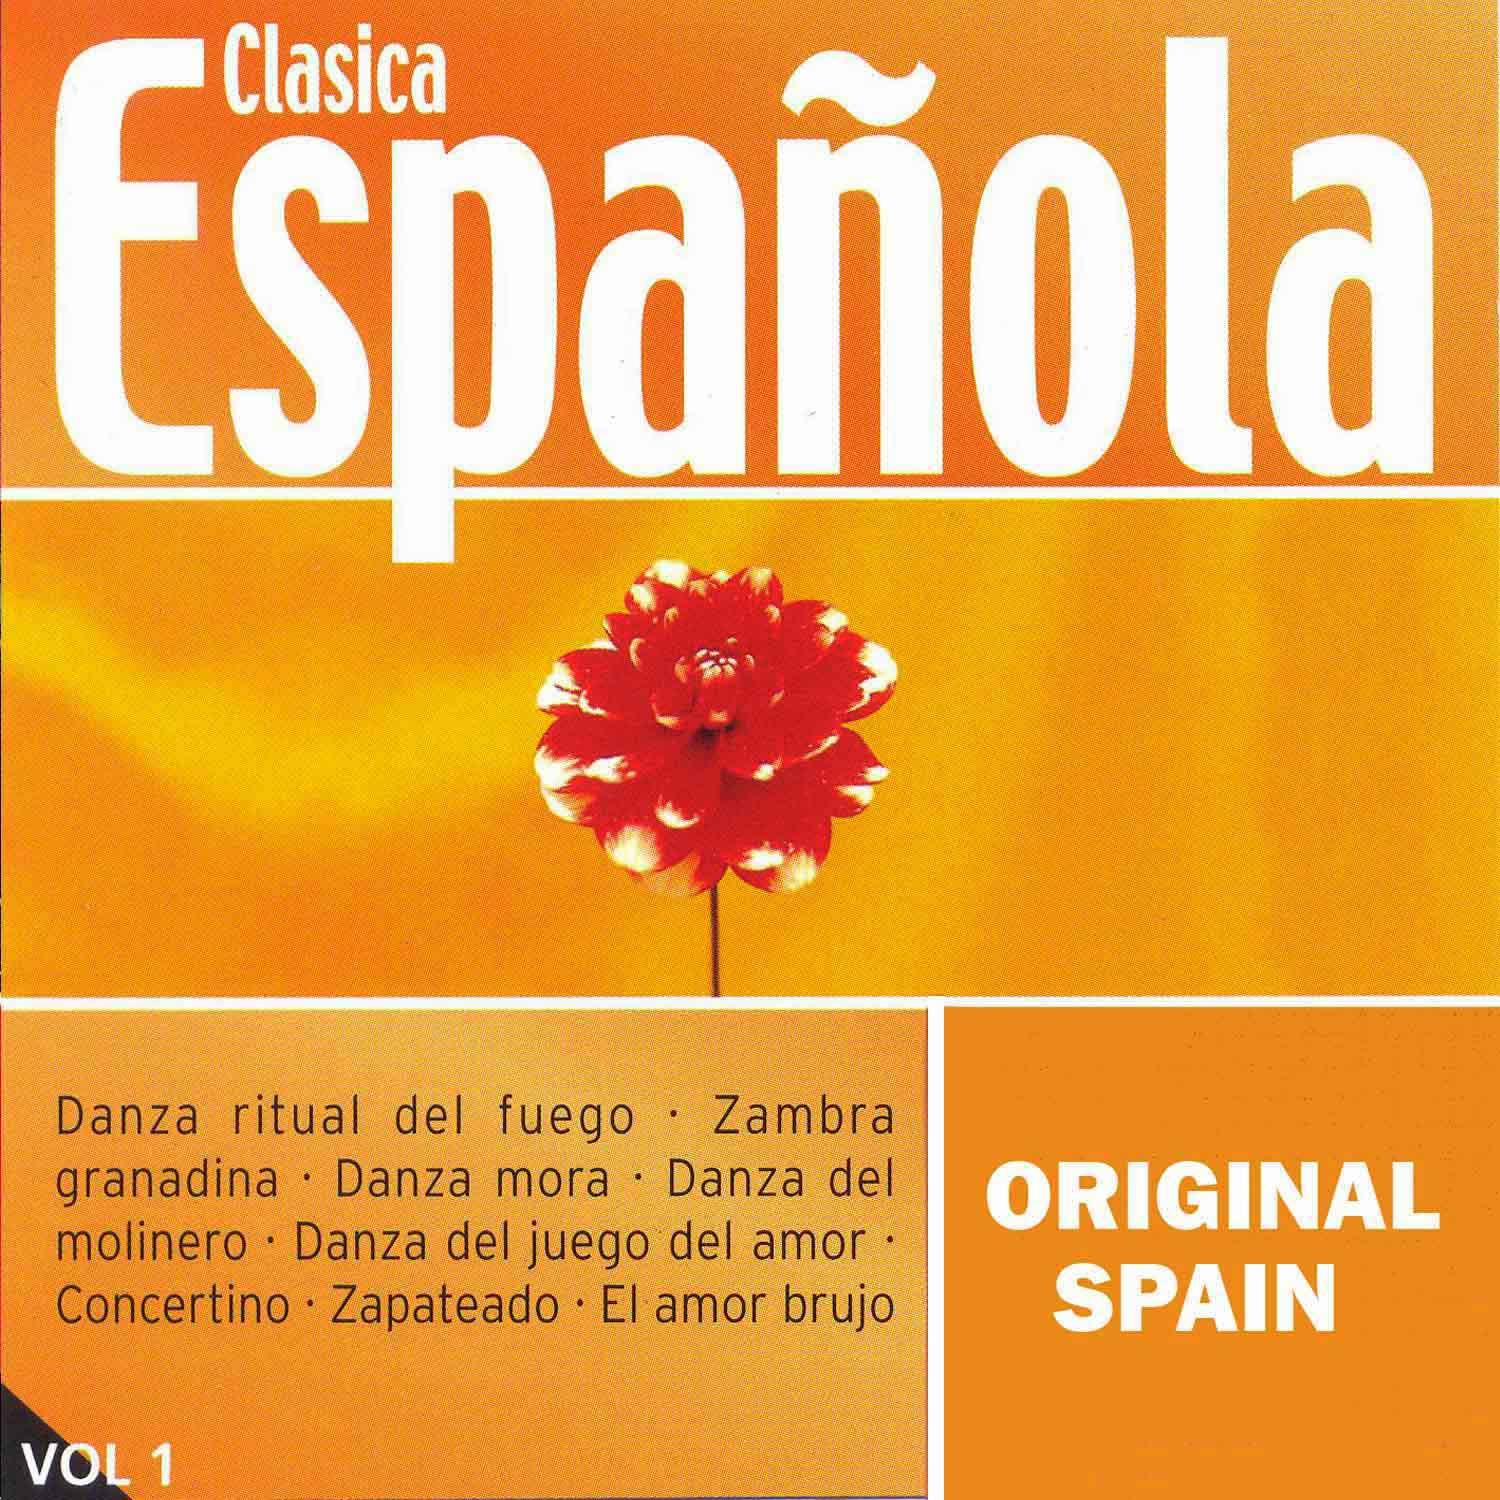 Original Spain: Cla sica Espa ola Vol. 1